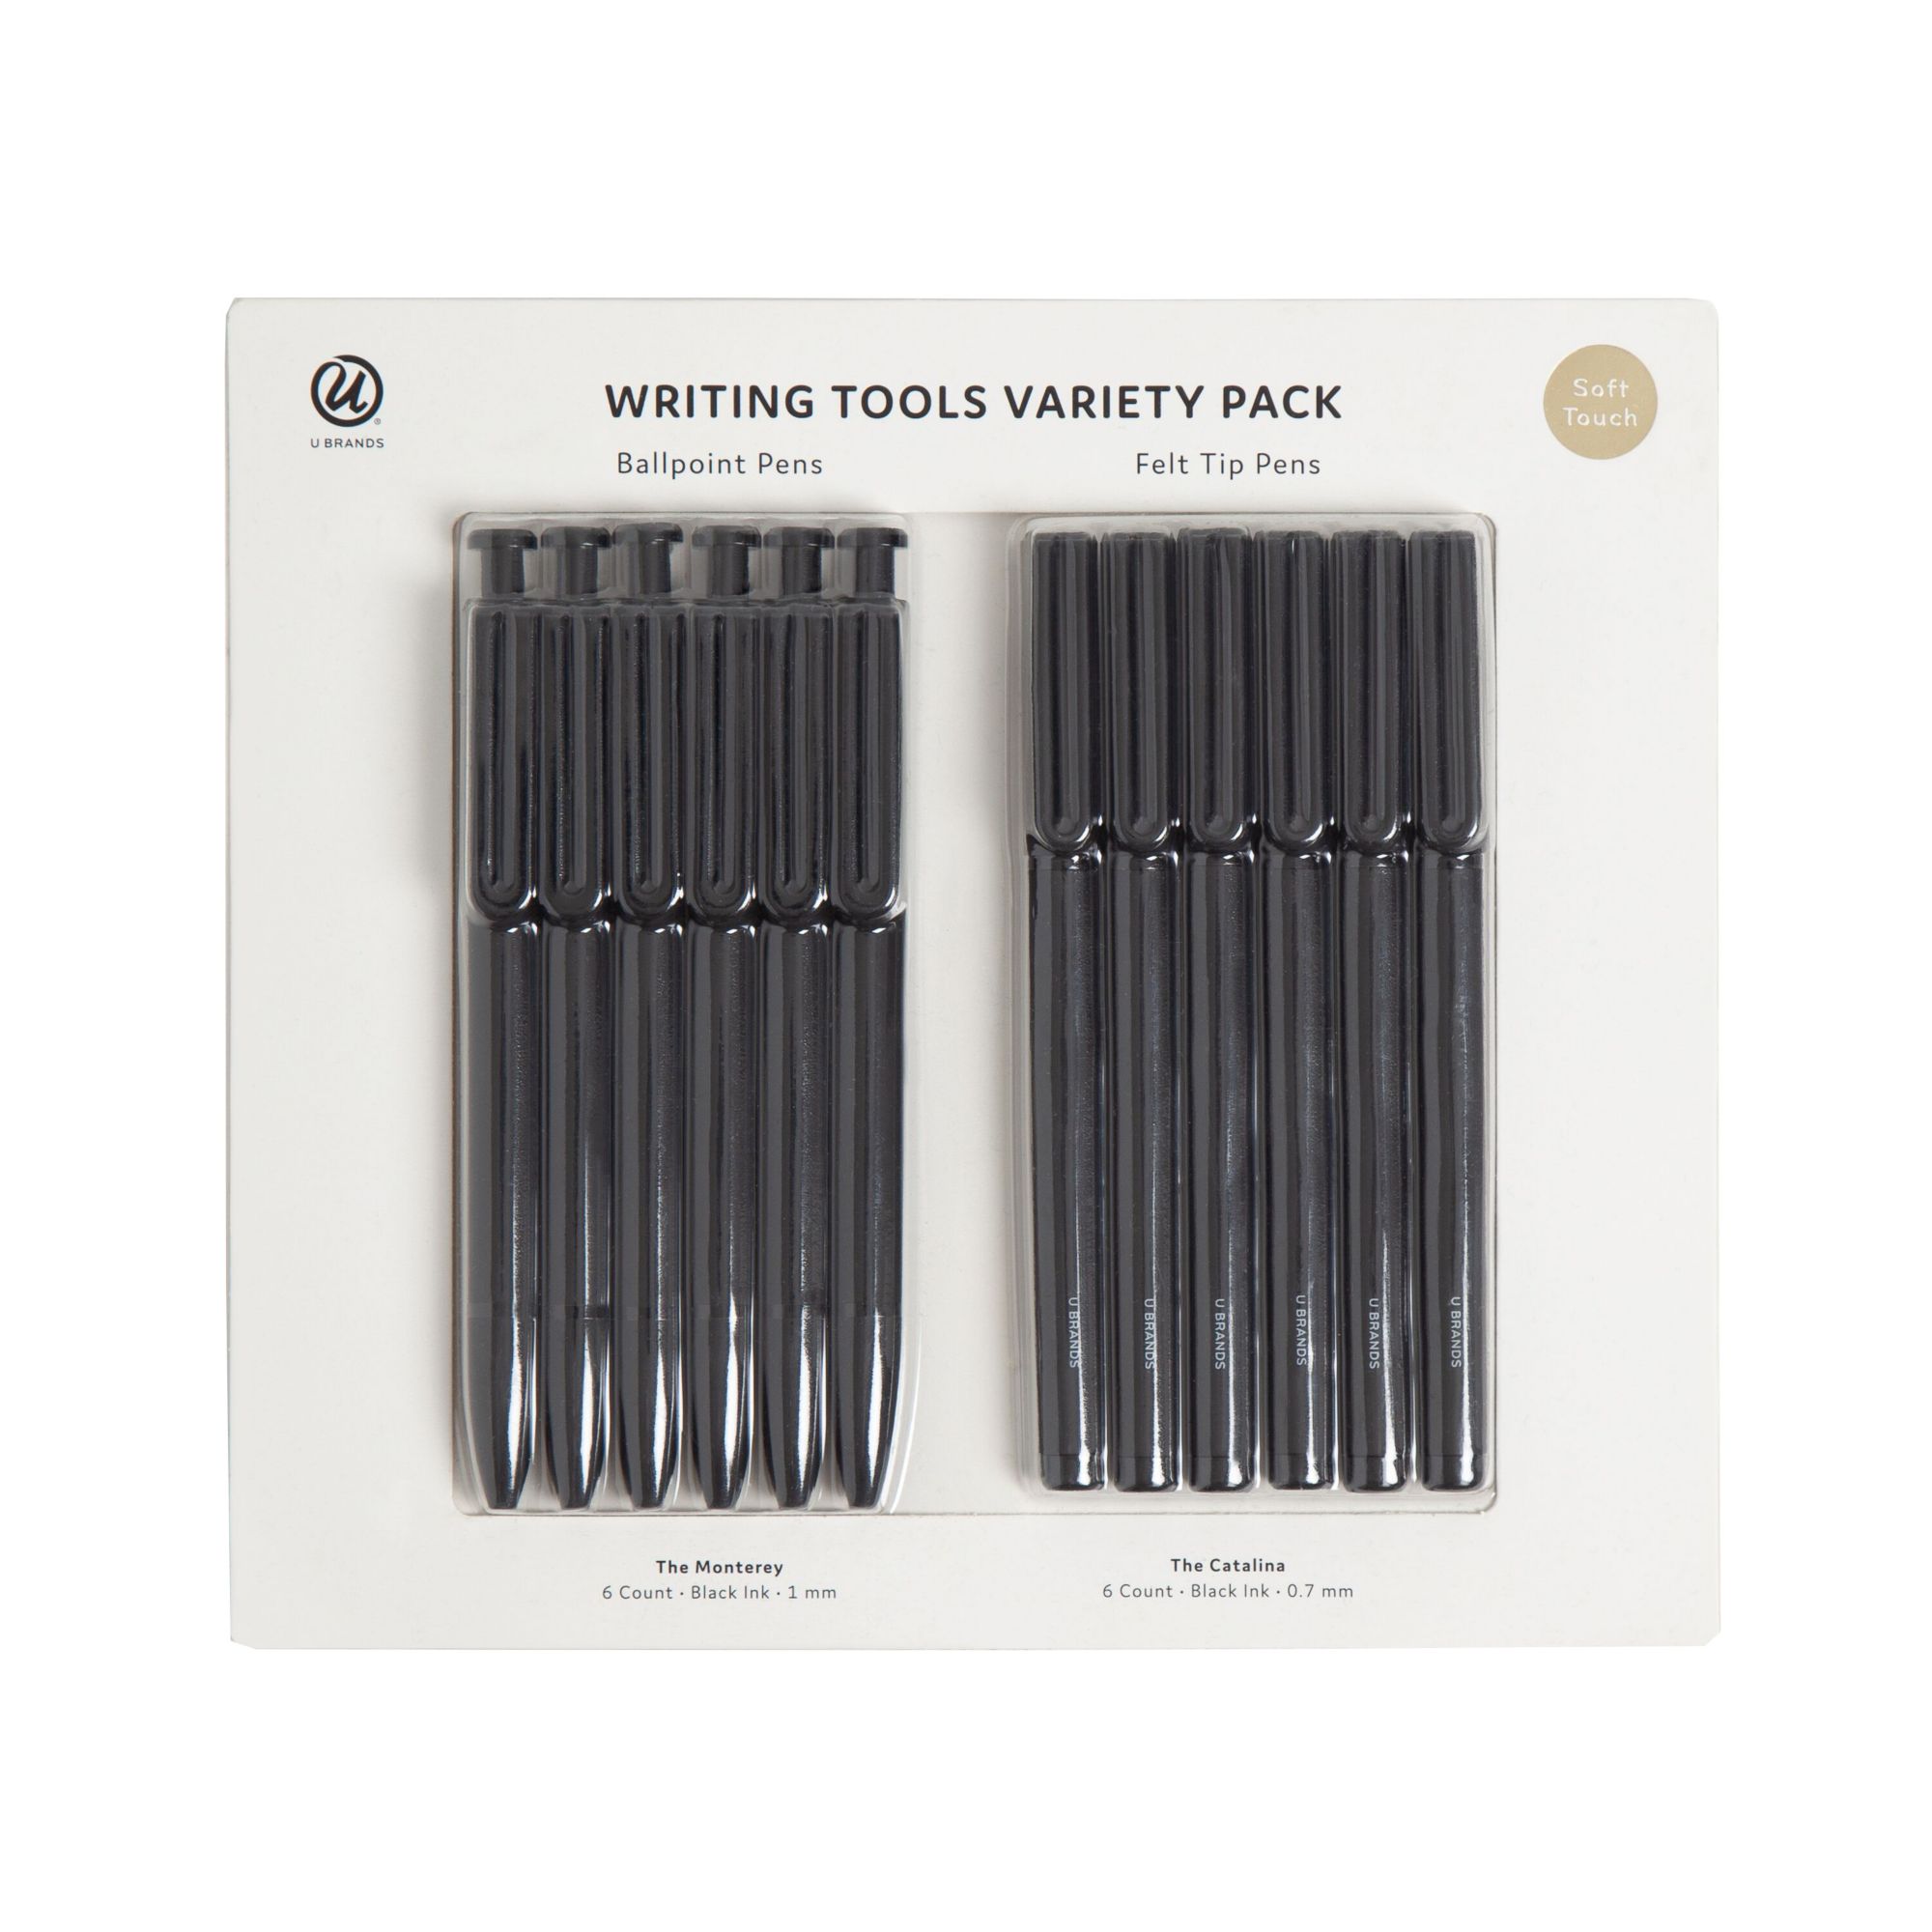 U Brands Monterey Ballpoint and Catalina Felt Tip Pens, 12 Pack, Black, 9.2L x 8.6W x .8H